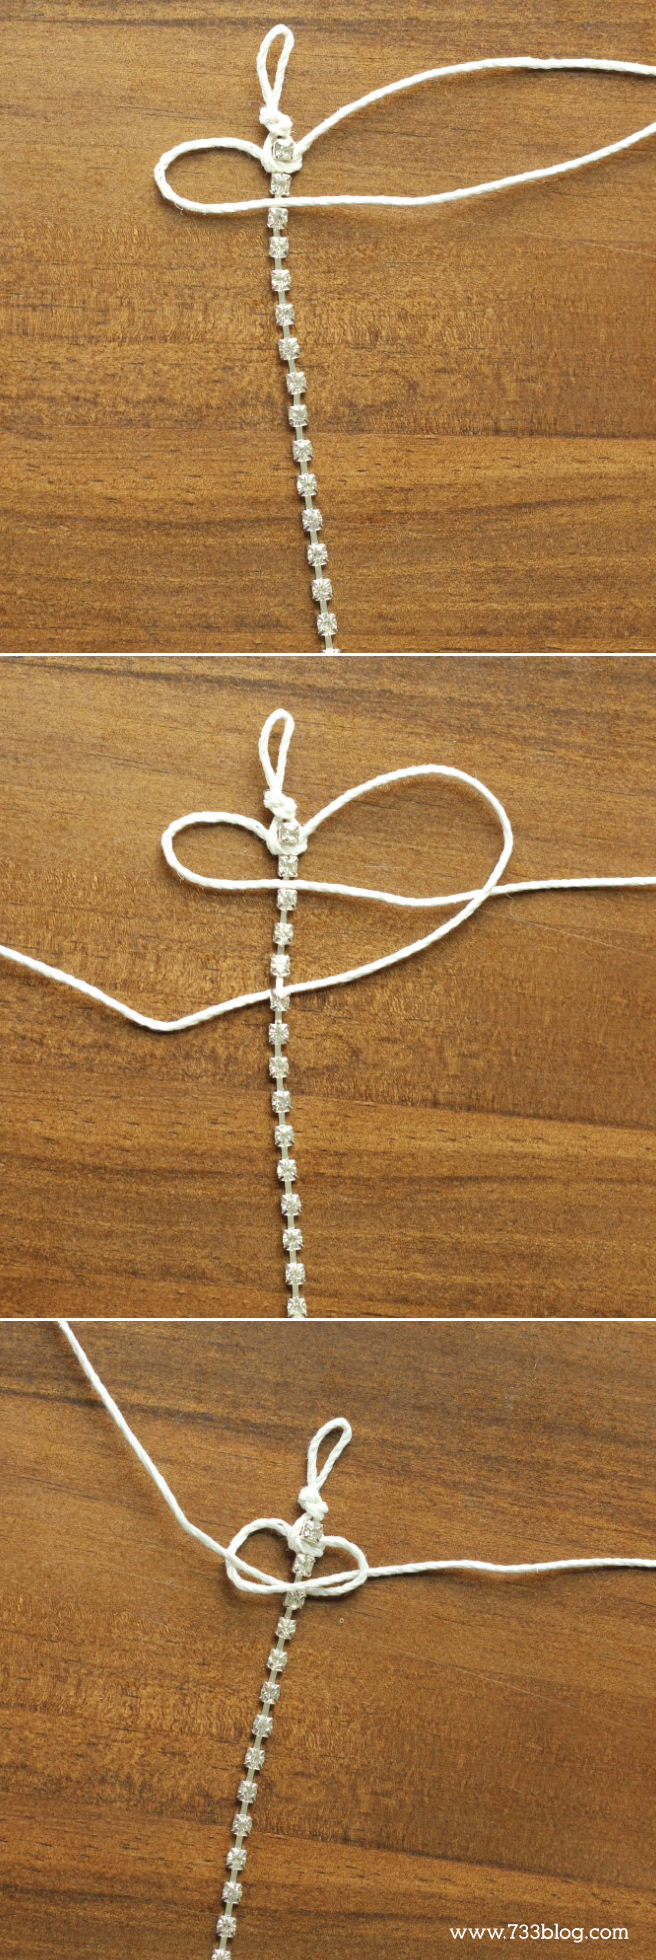 DIY Macrame Bracelet Square Knot | Macrame Bracelets Tutorial For Beginners  - YouTube